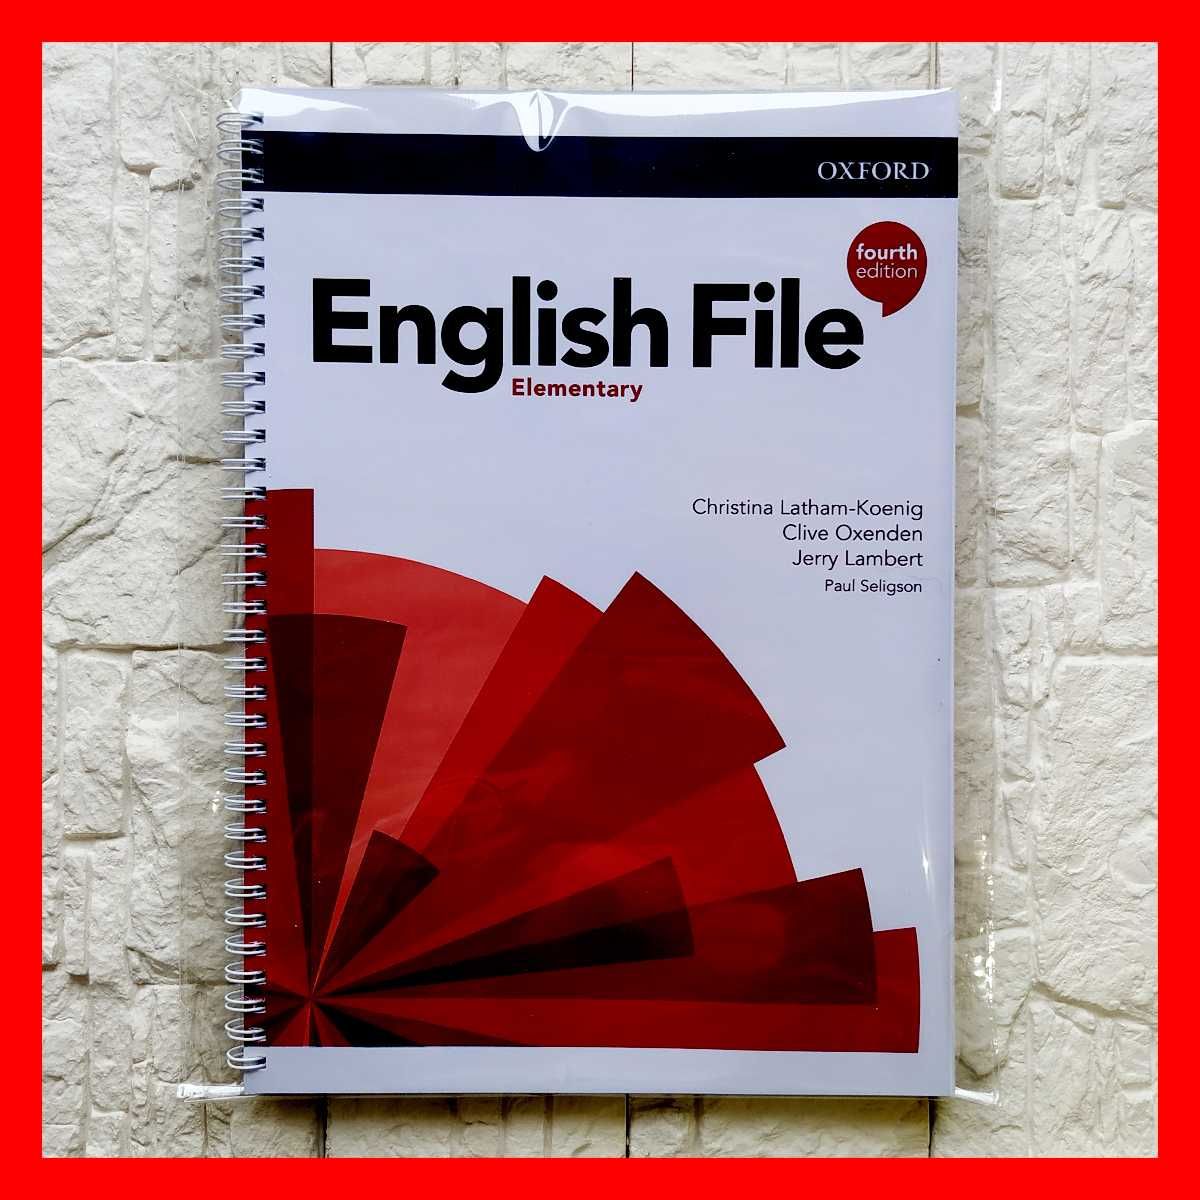 English File 4th edition | Все уровни | Новое издание